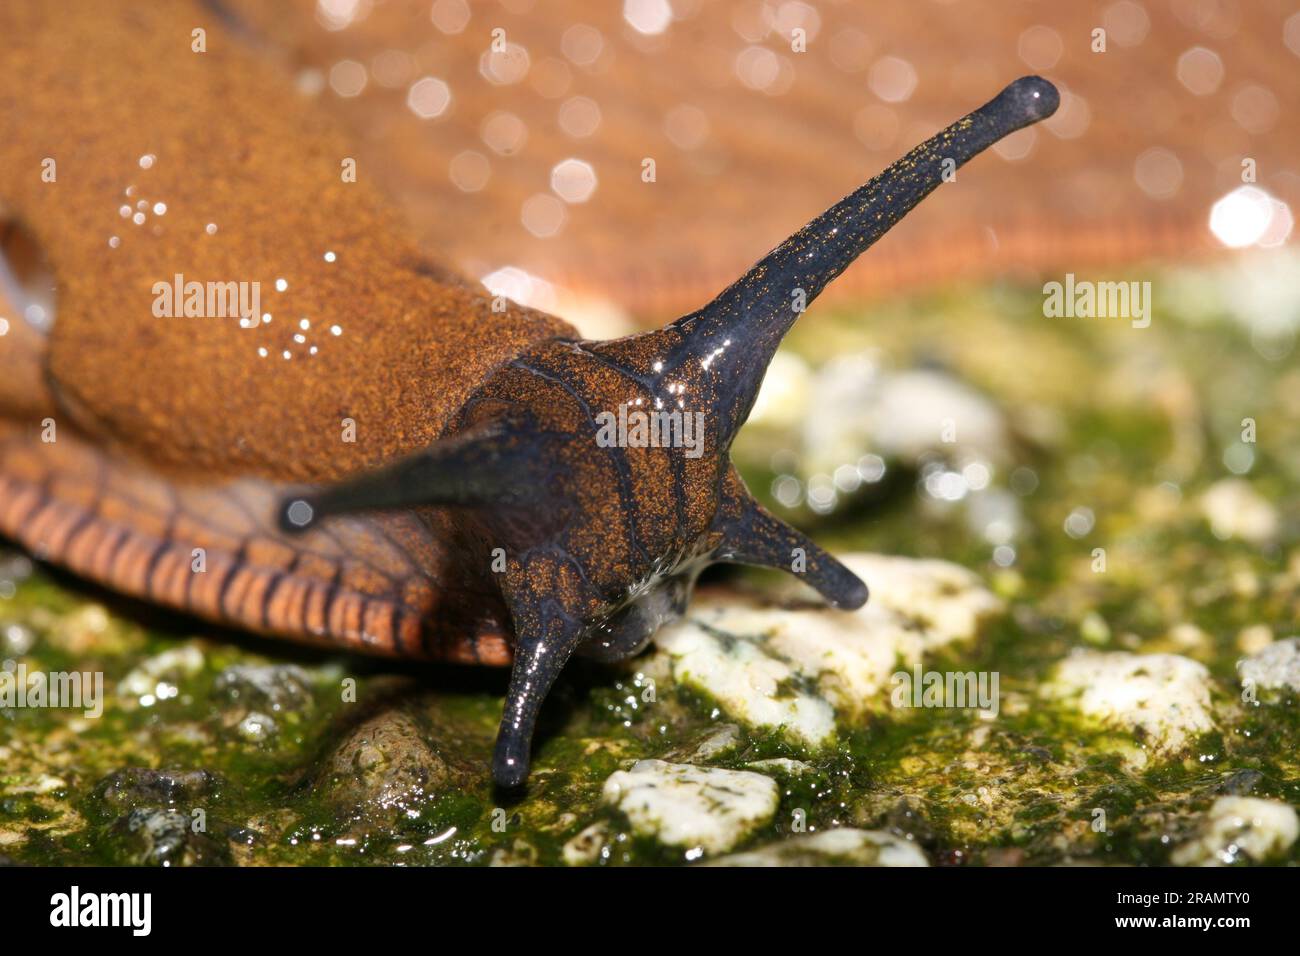 Black garden Slug on mossy rock Stock Photo